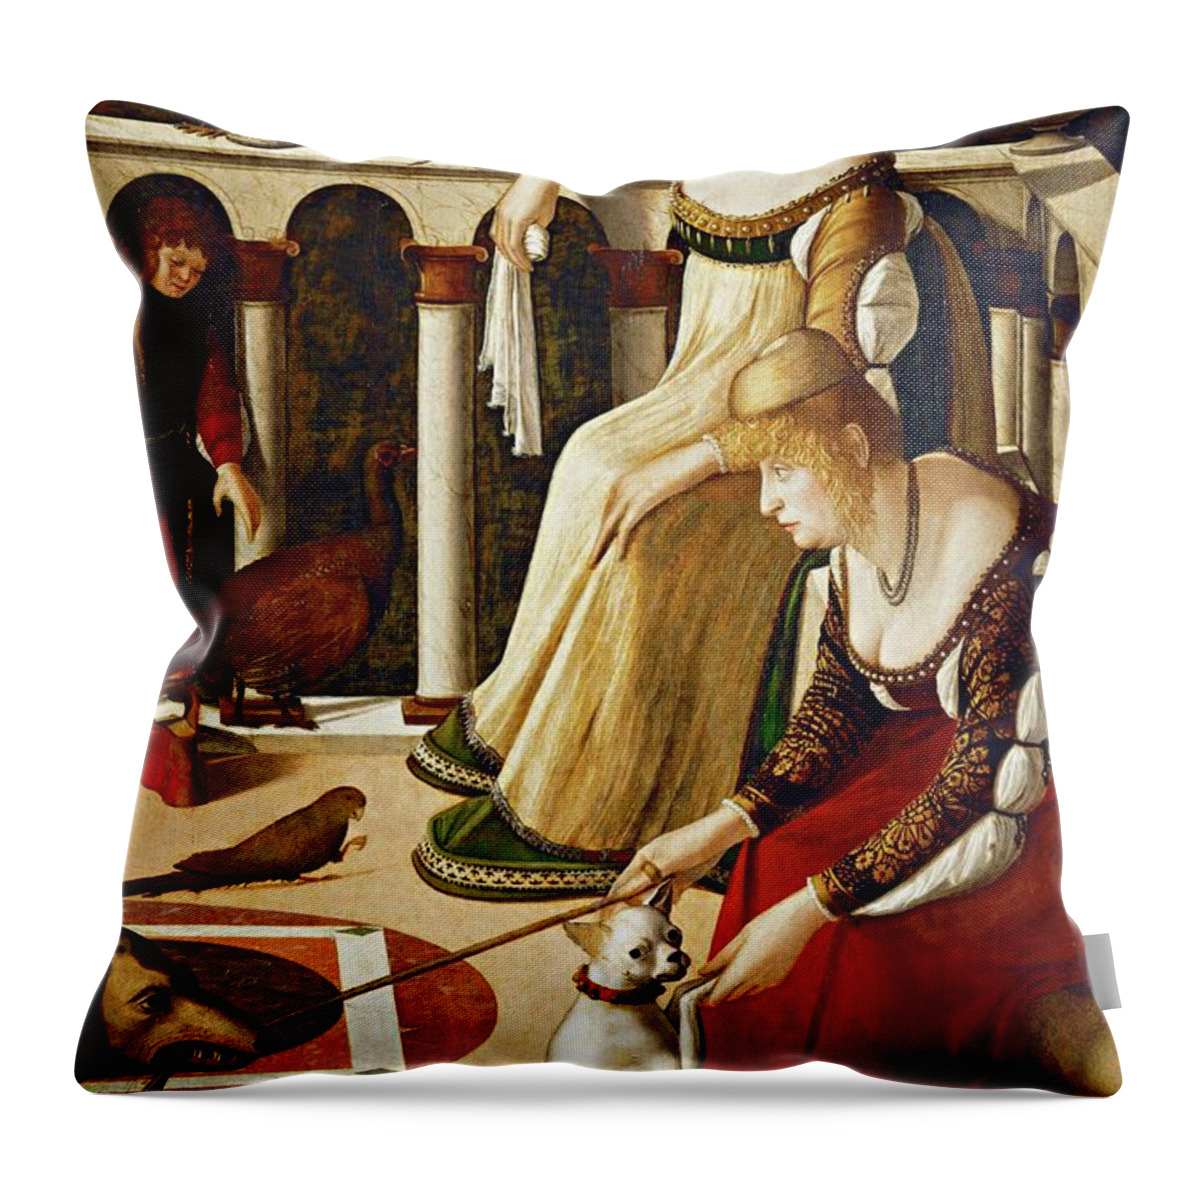 Vittore Carpaccio Throw Pillow featuring the painting Two venetian courtesans. by Vittore Carpaccio -c 1460-1526-